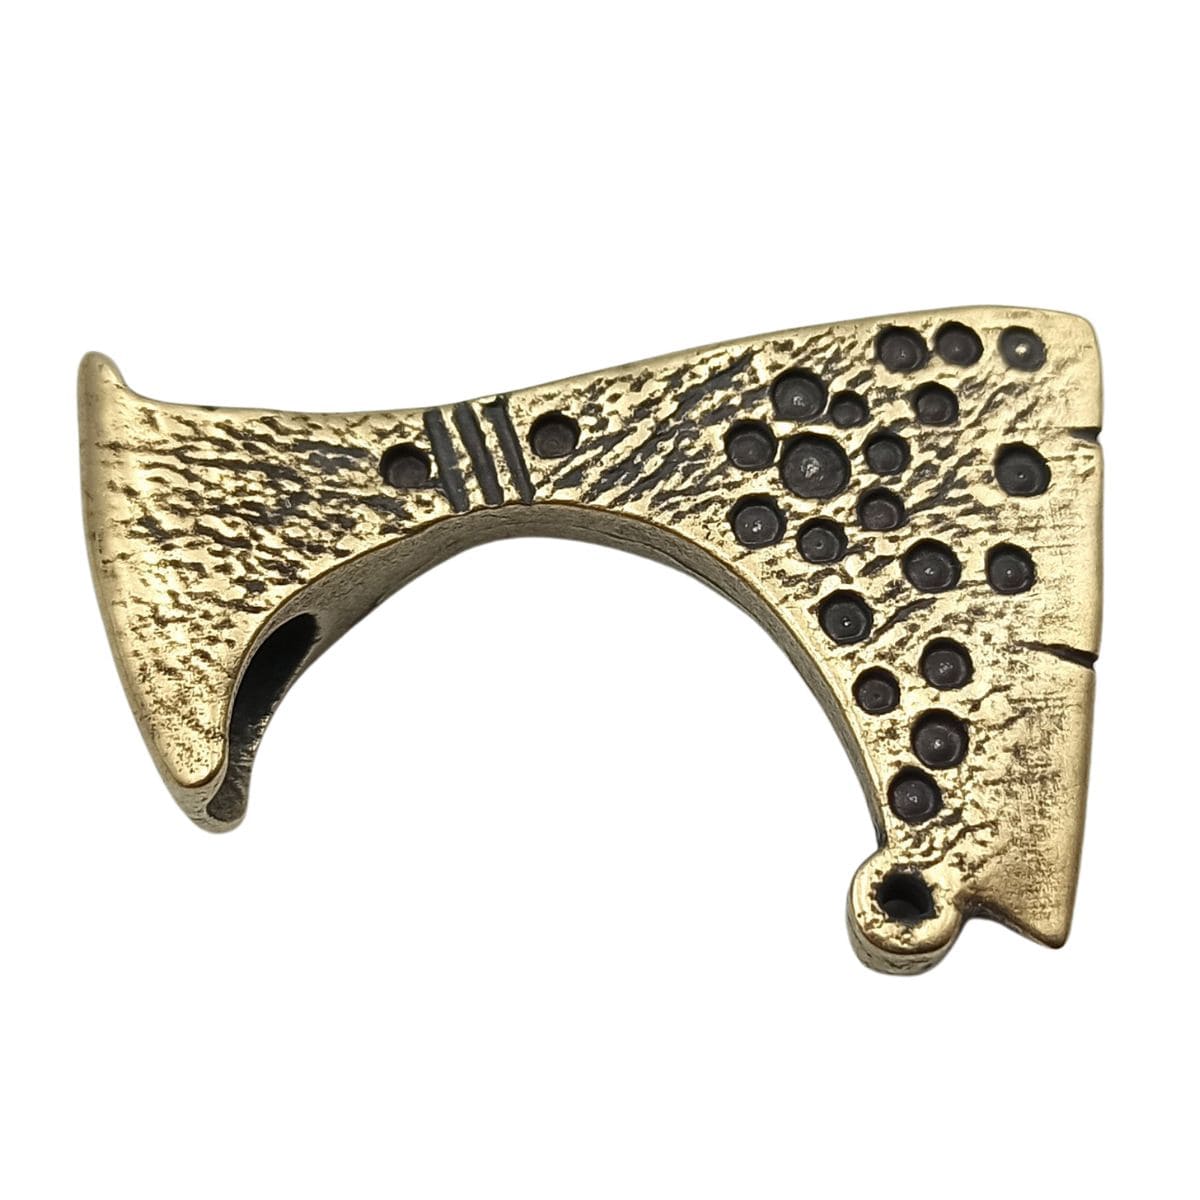 Viking axe bronze pendant replica